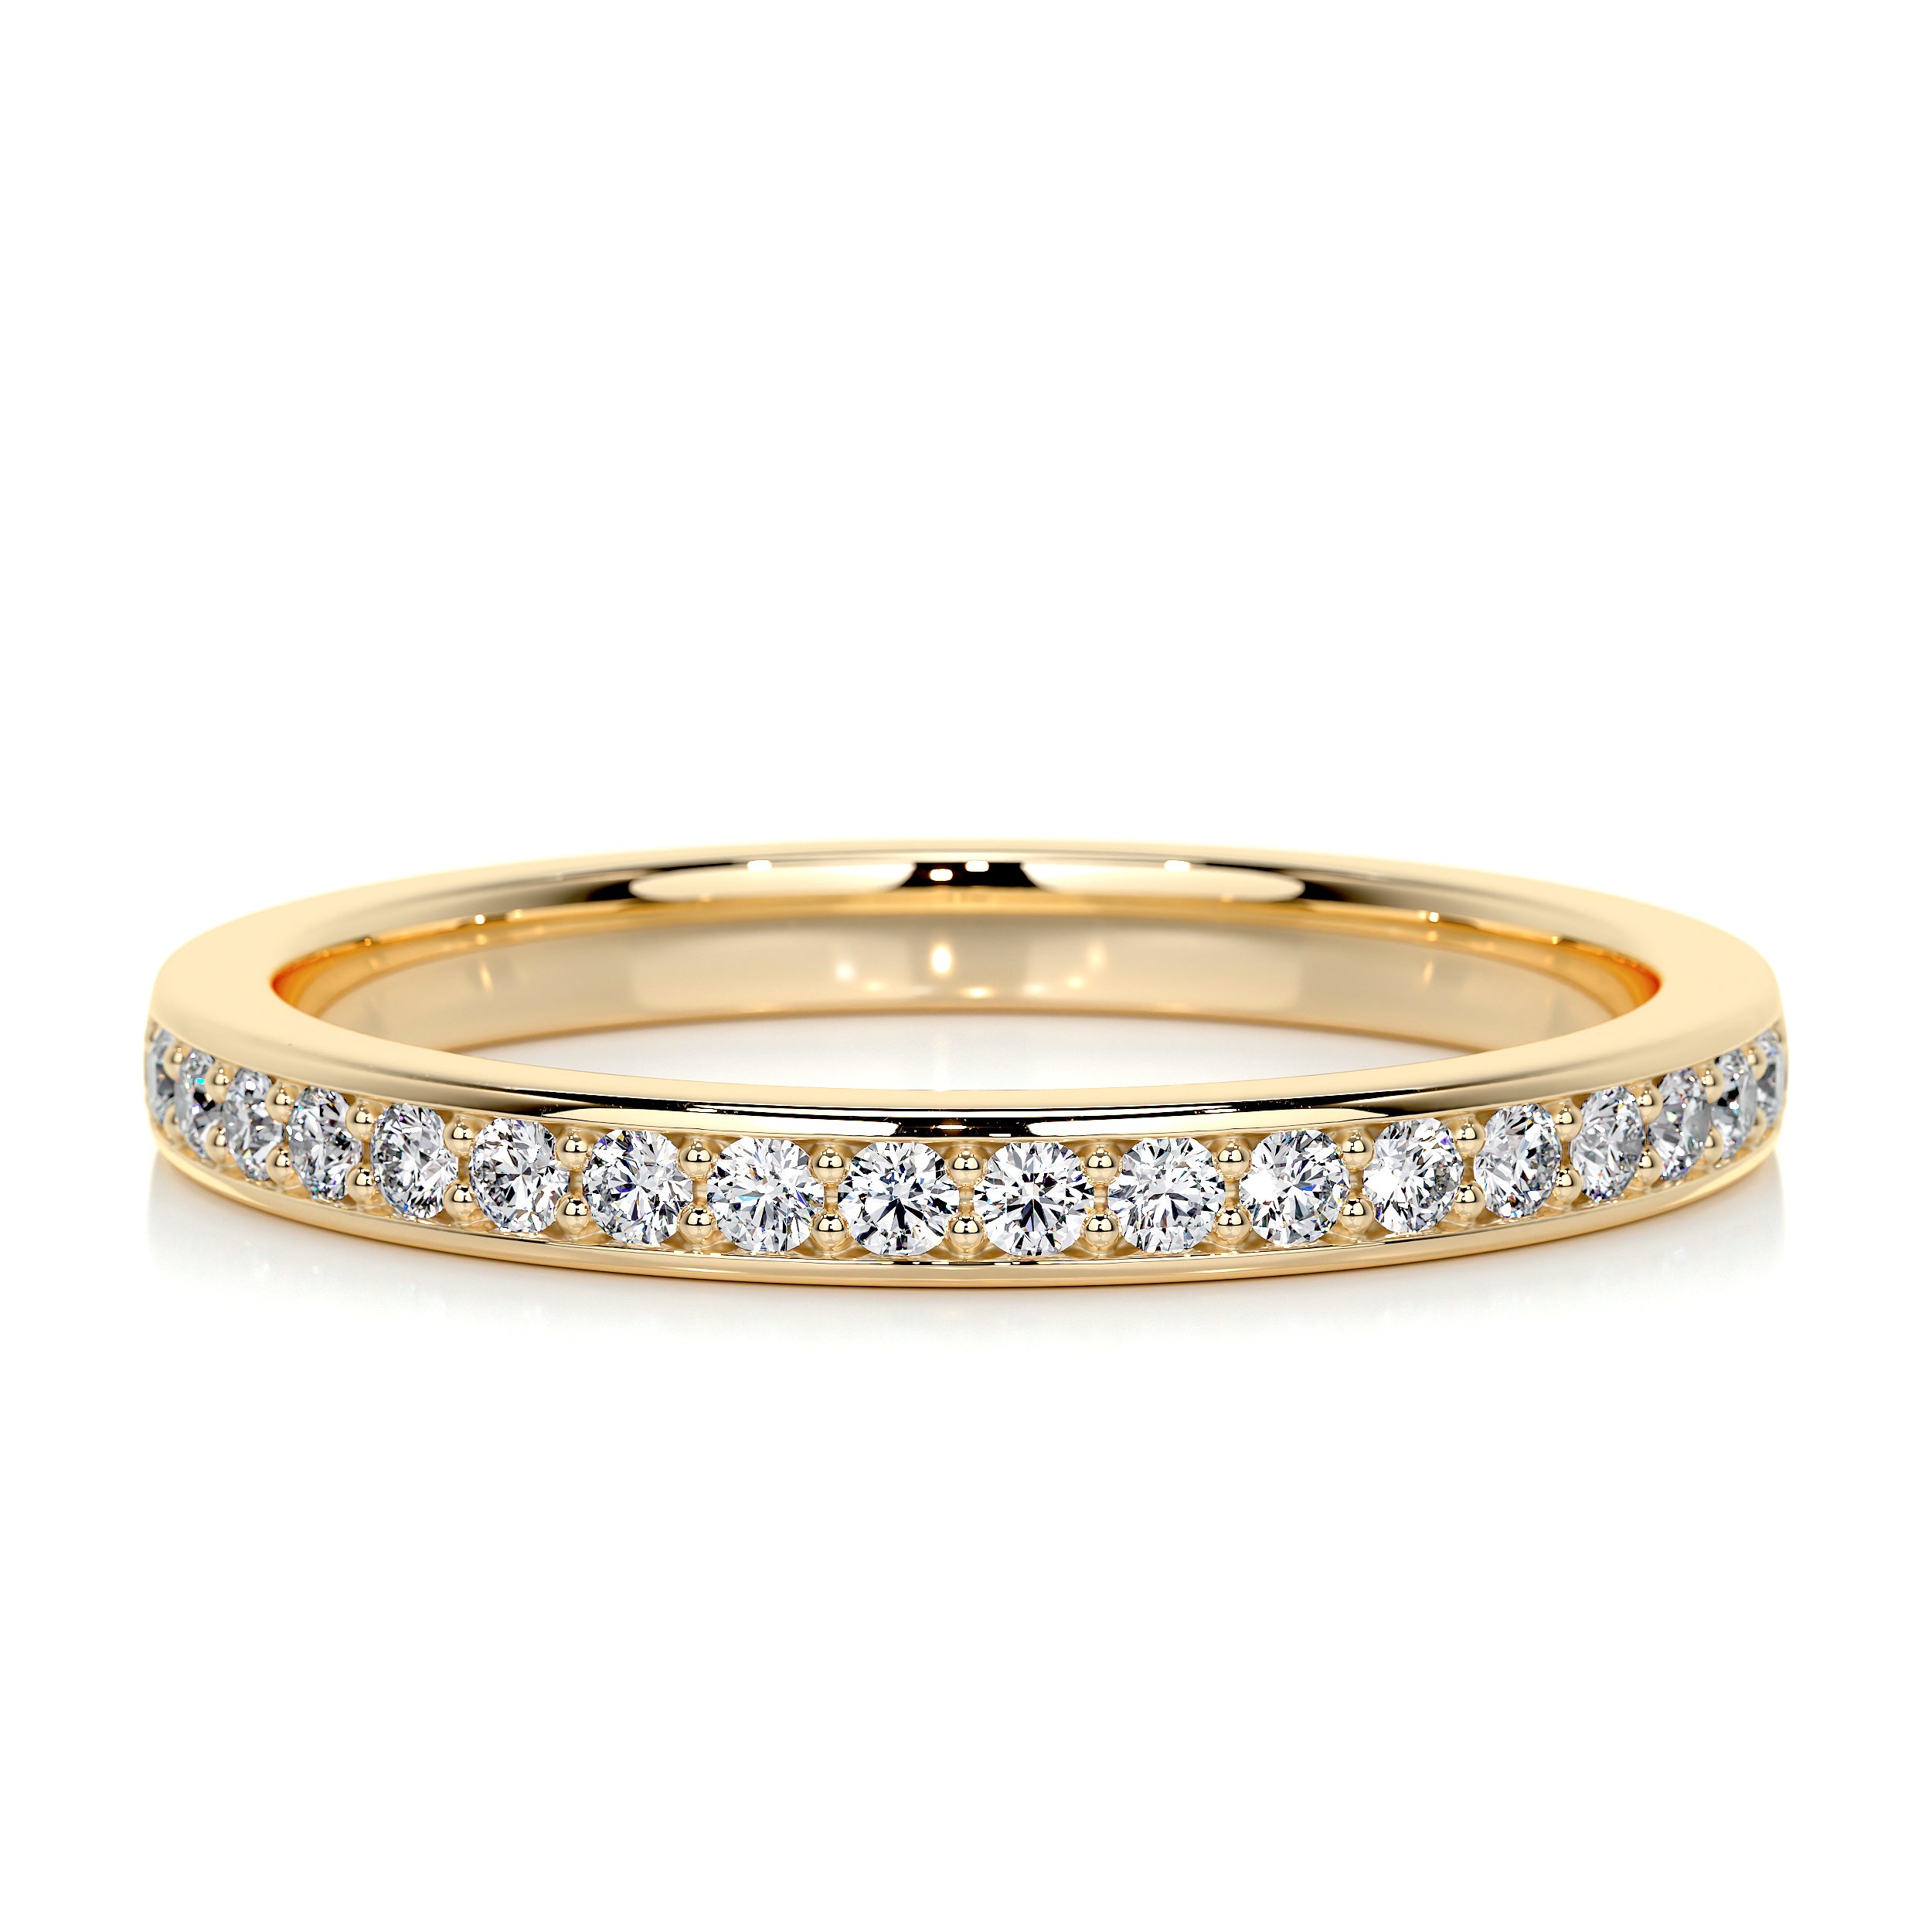 Giselle Diamond Wedding Ring   (0.2 Carat) -18K Yellow Gold